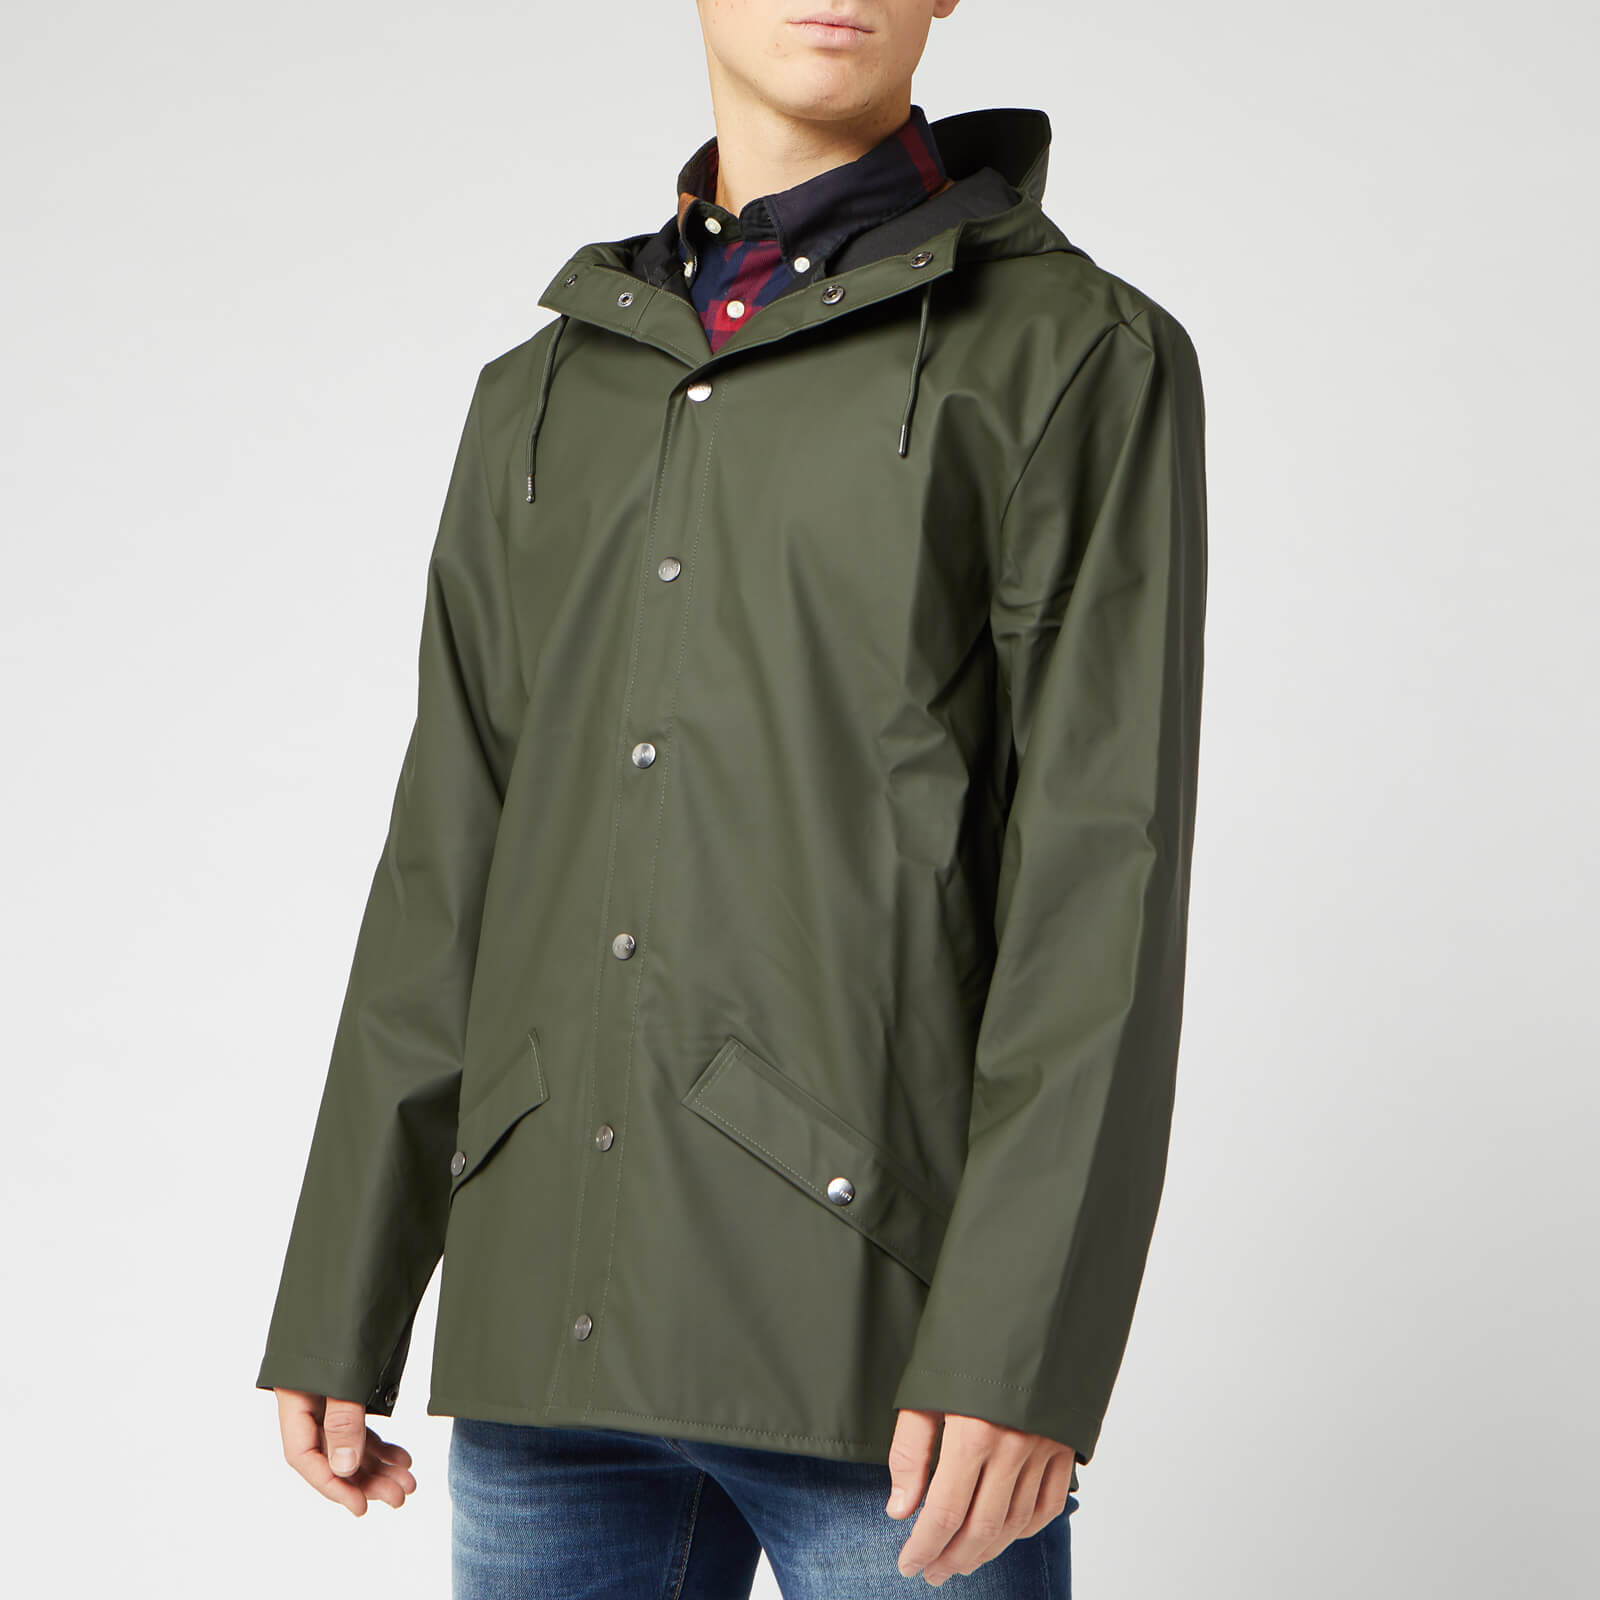 Rains Jacket - Green - XS/S